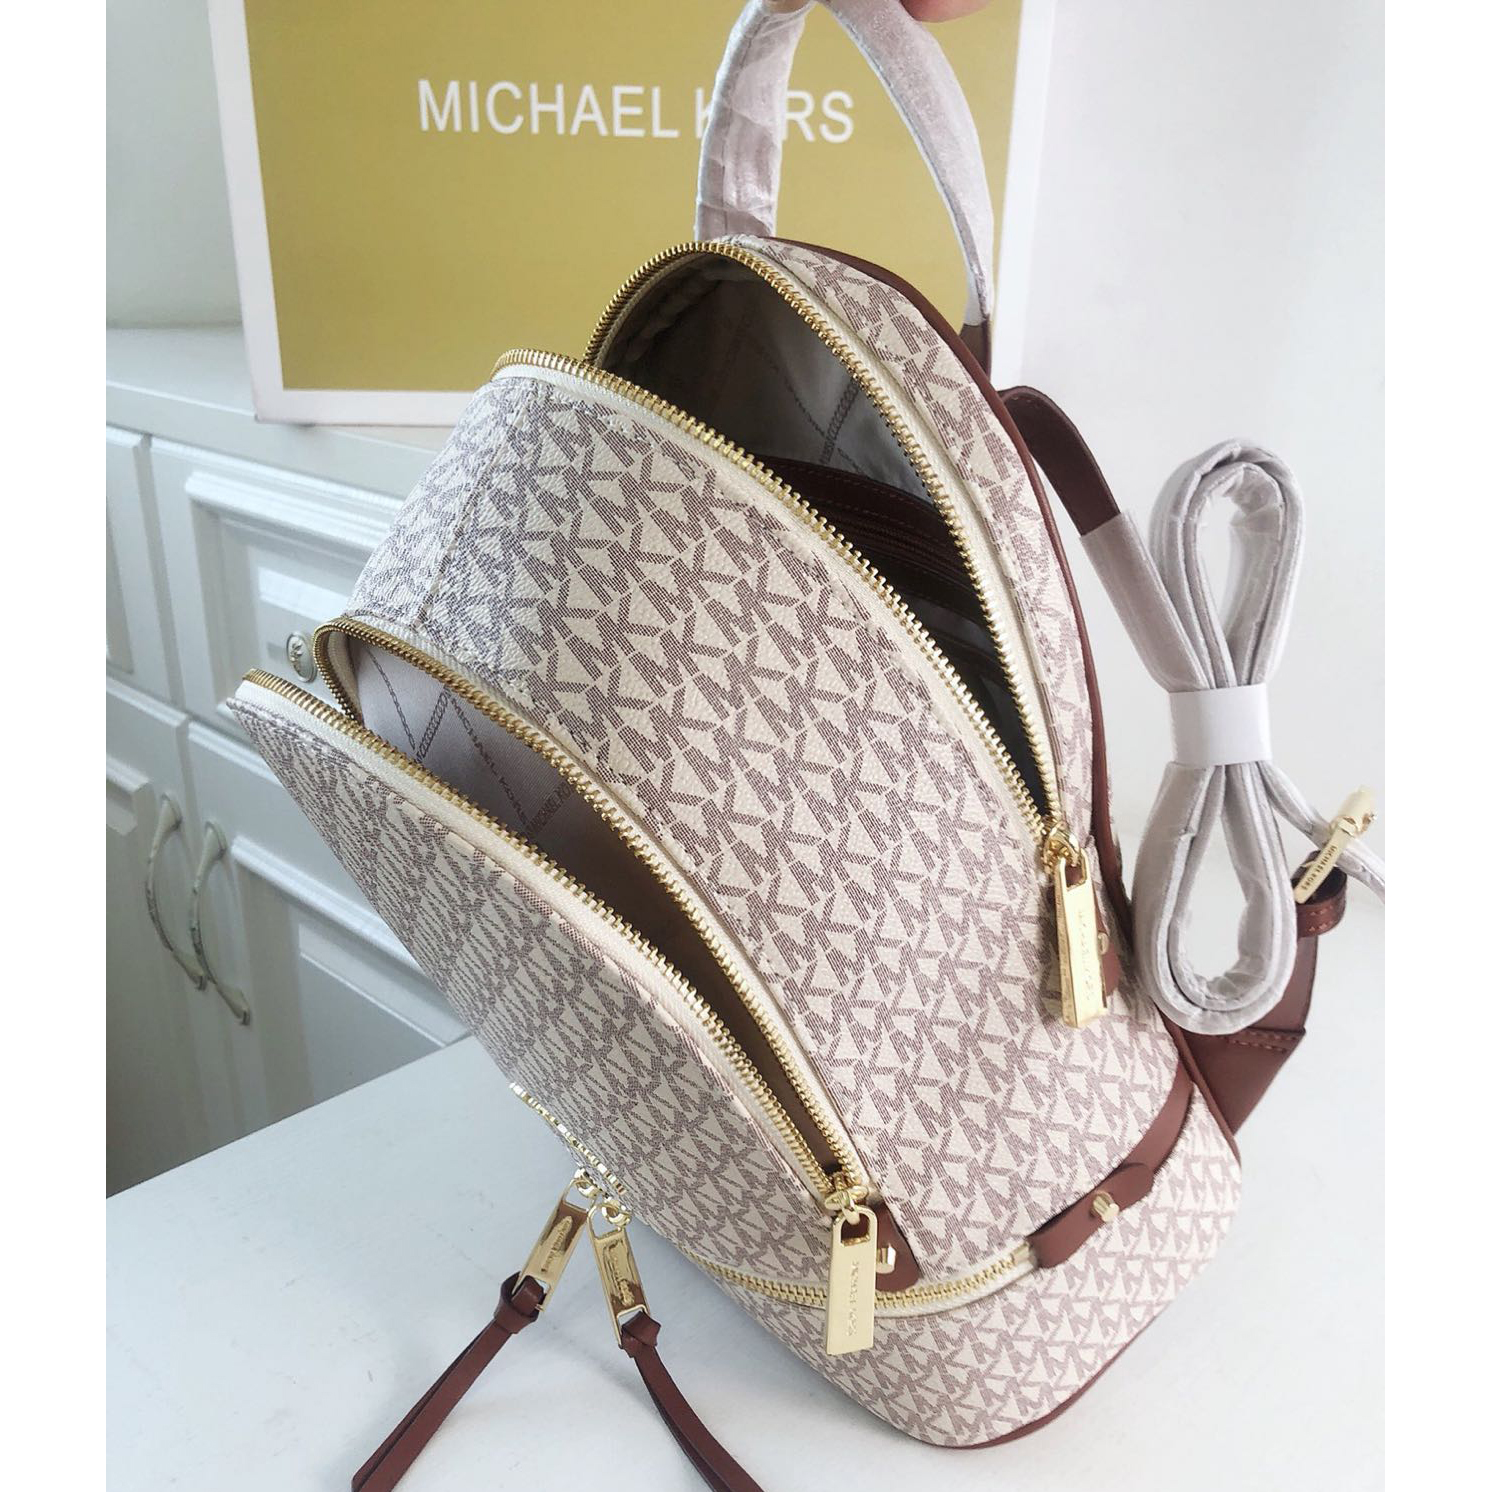 Amazoncom Michael Kors  Fashion Backpacks  Handbags  Wallets  Clothing Shoes  Jewelry